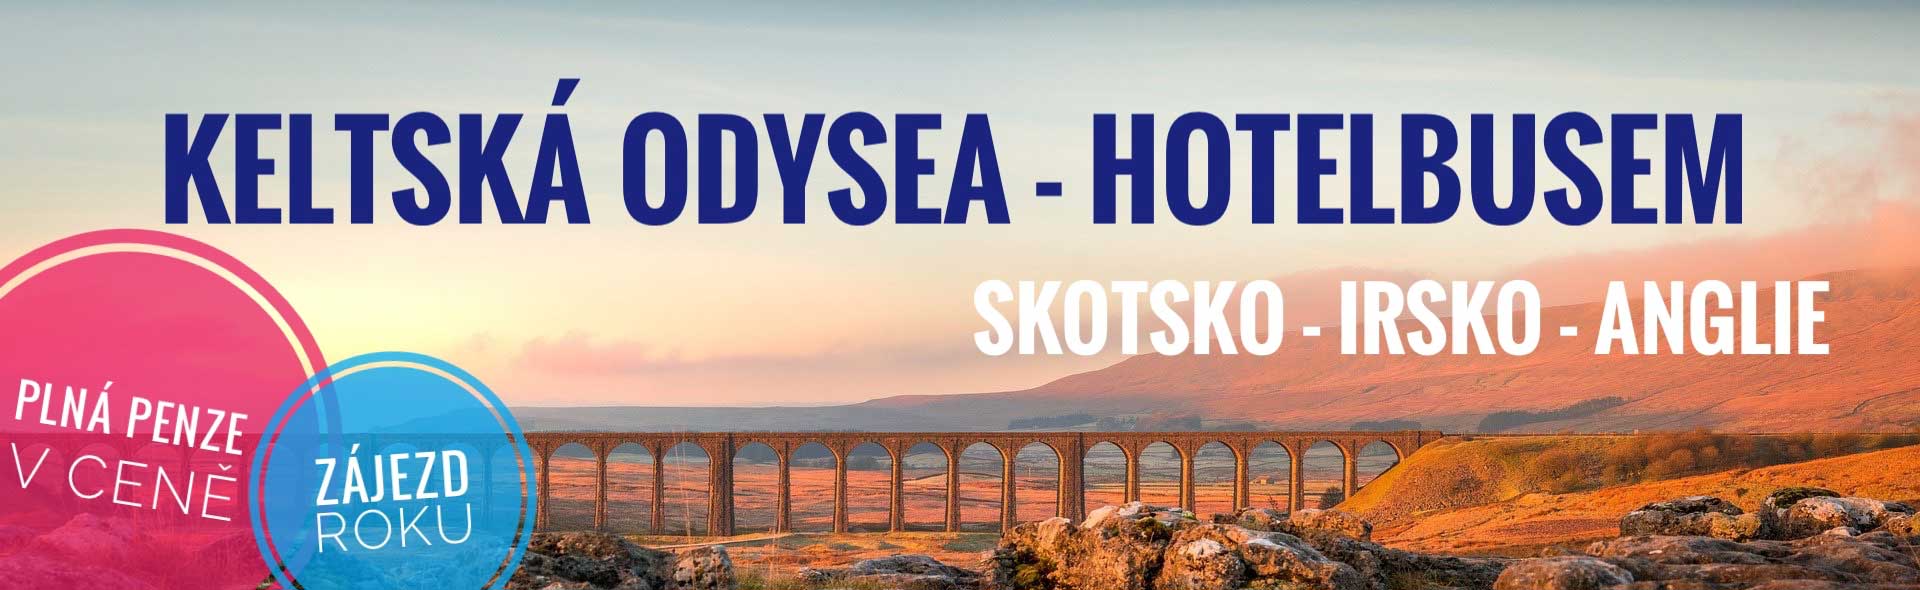 Keltská odyssea hotelbusem - Skotsko, Irsko, Anglie - zájezd roku, plná penze !